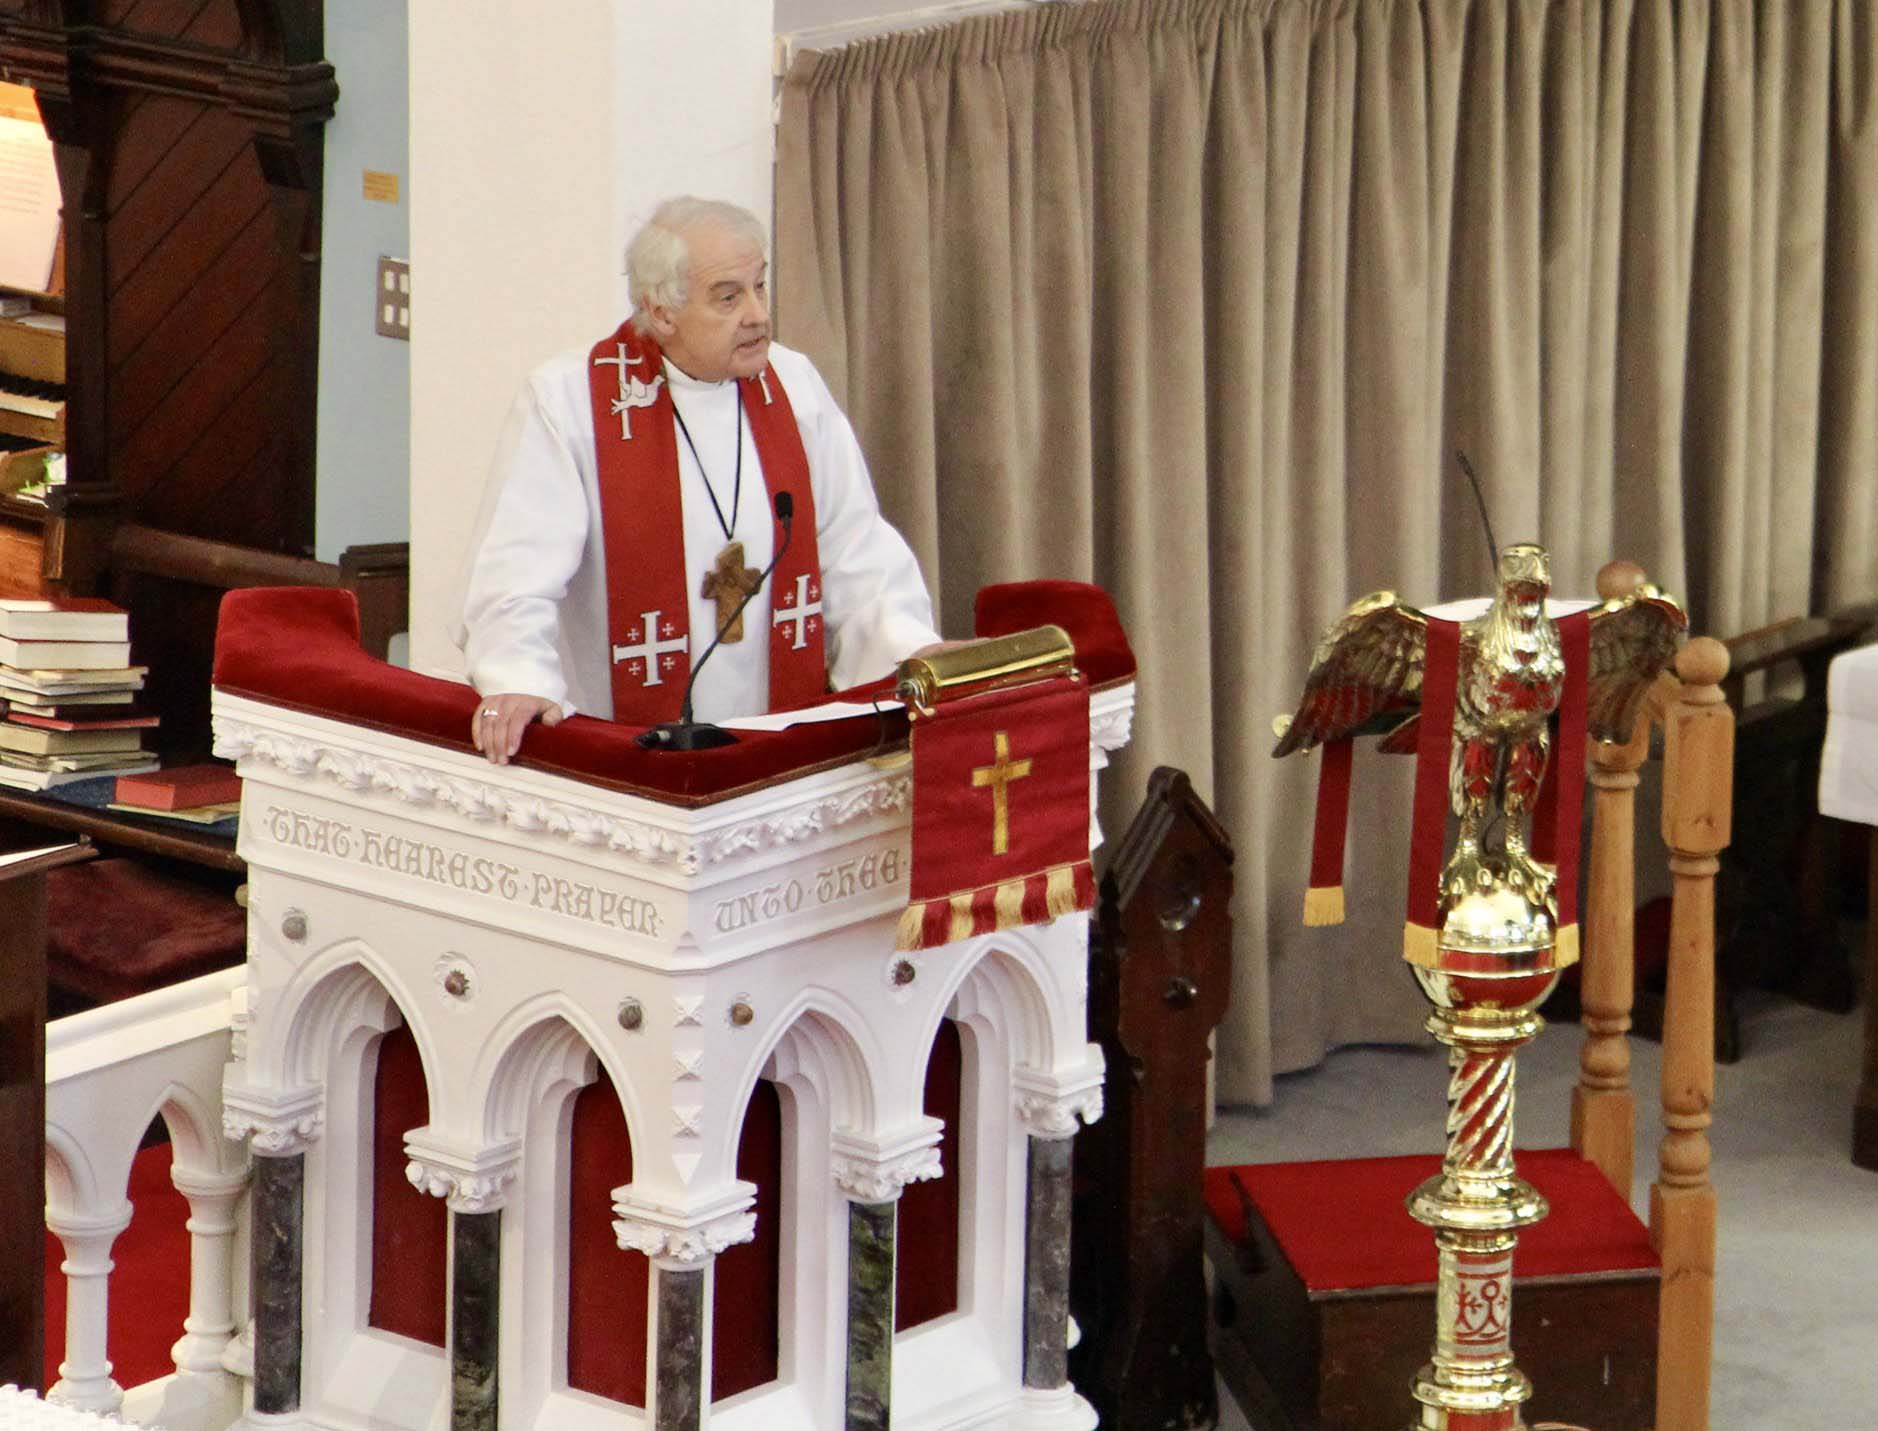 Archbishop Michael Jackson delivering the Presidential Address.